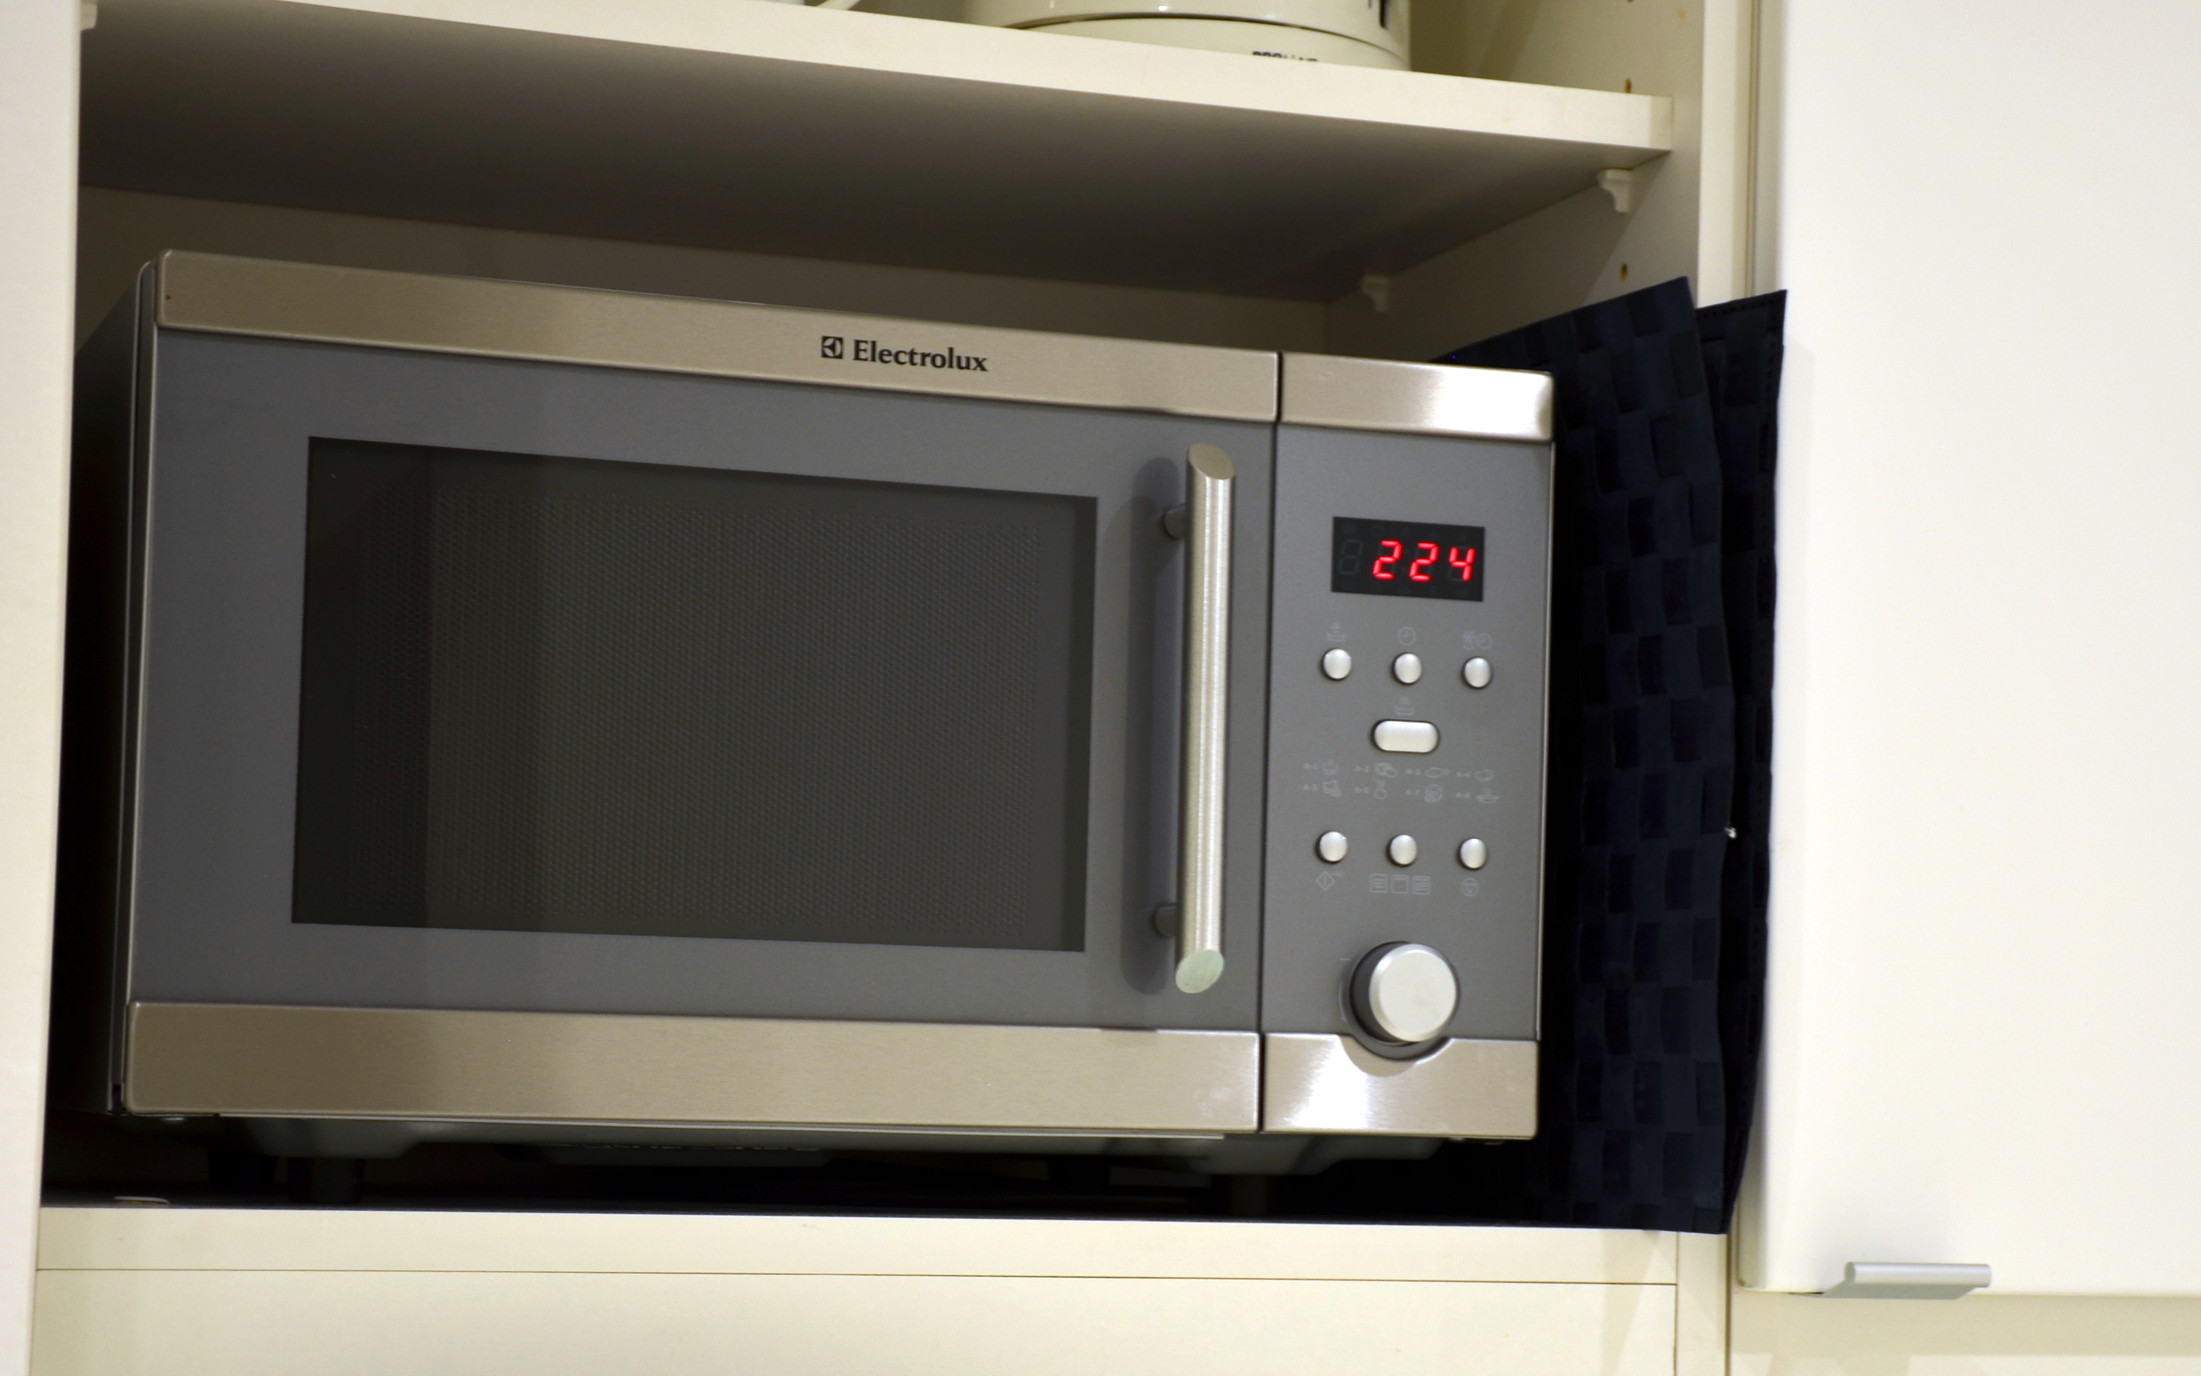 an open microwave oven with the door open